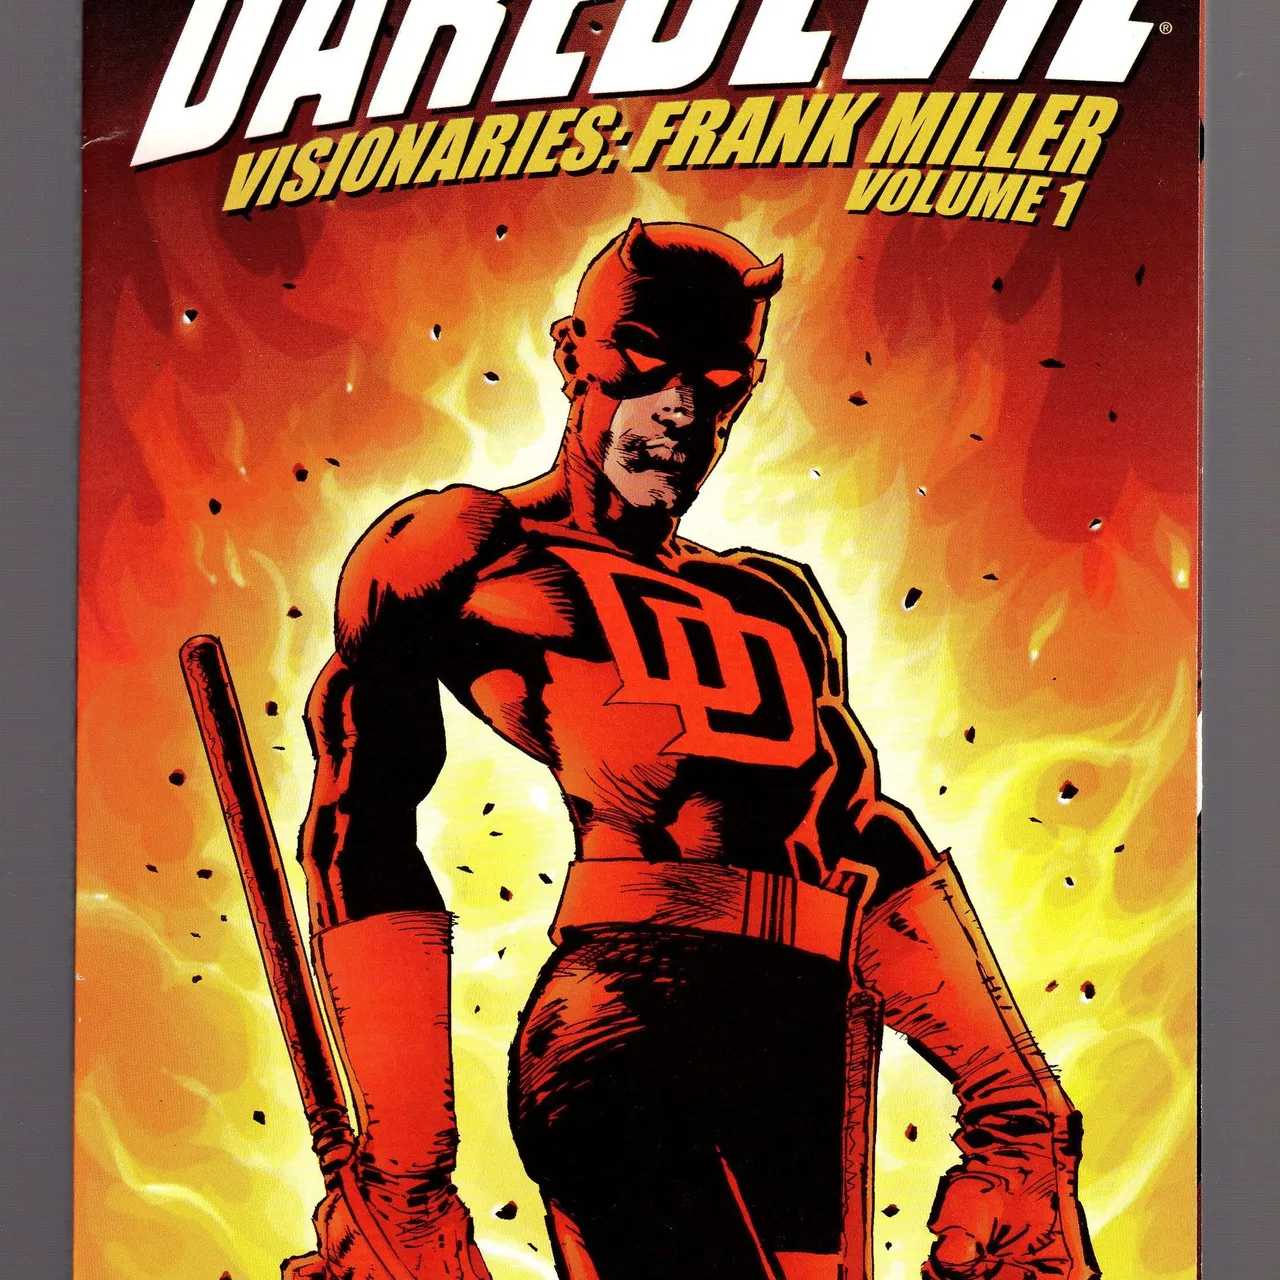 Daredevil - Visionaries: Frank Miller volume 1 (graphic novel) photo 1